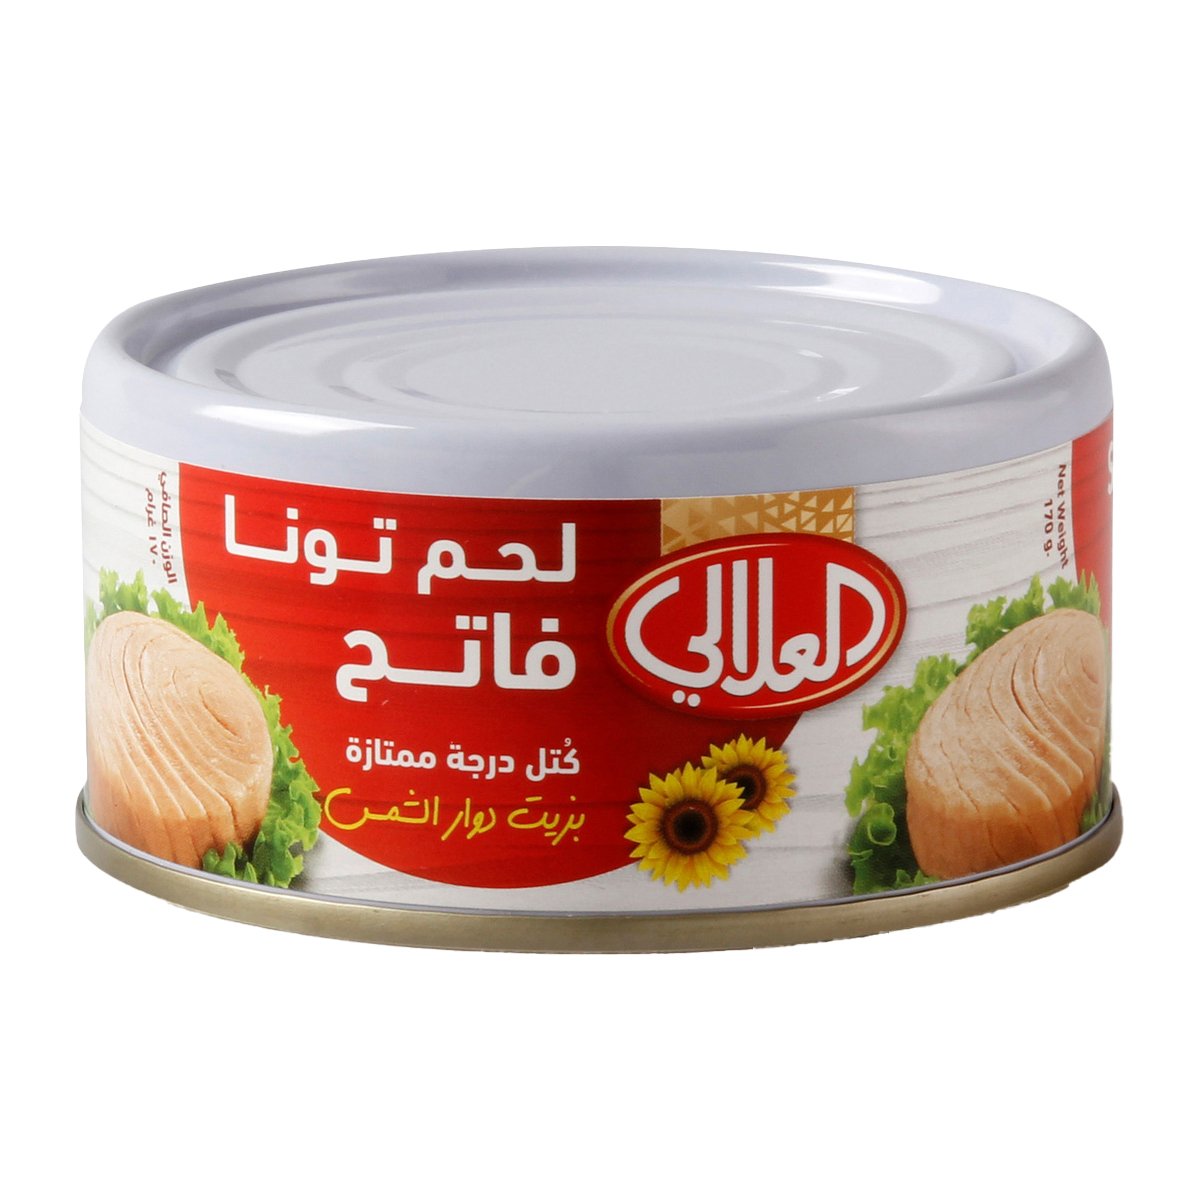 Al Alali Skip Jack Tuna Solid Pack In Sunflower Oil 170 g